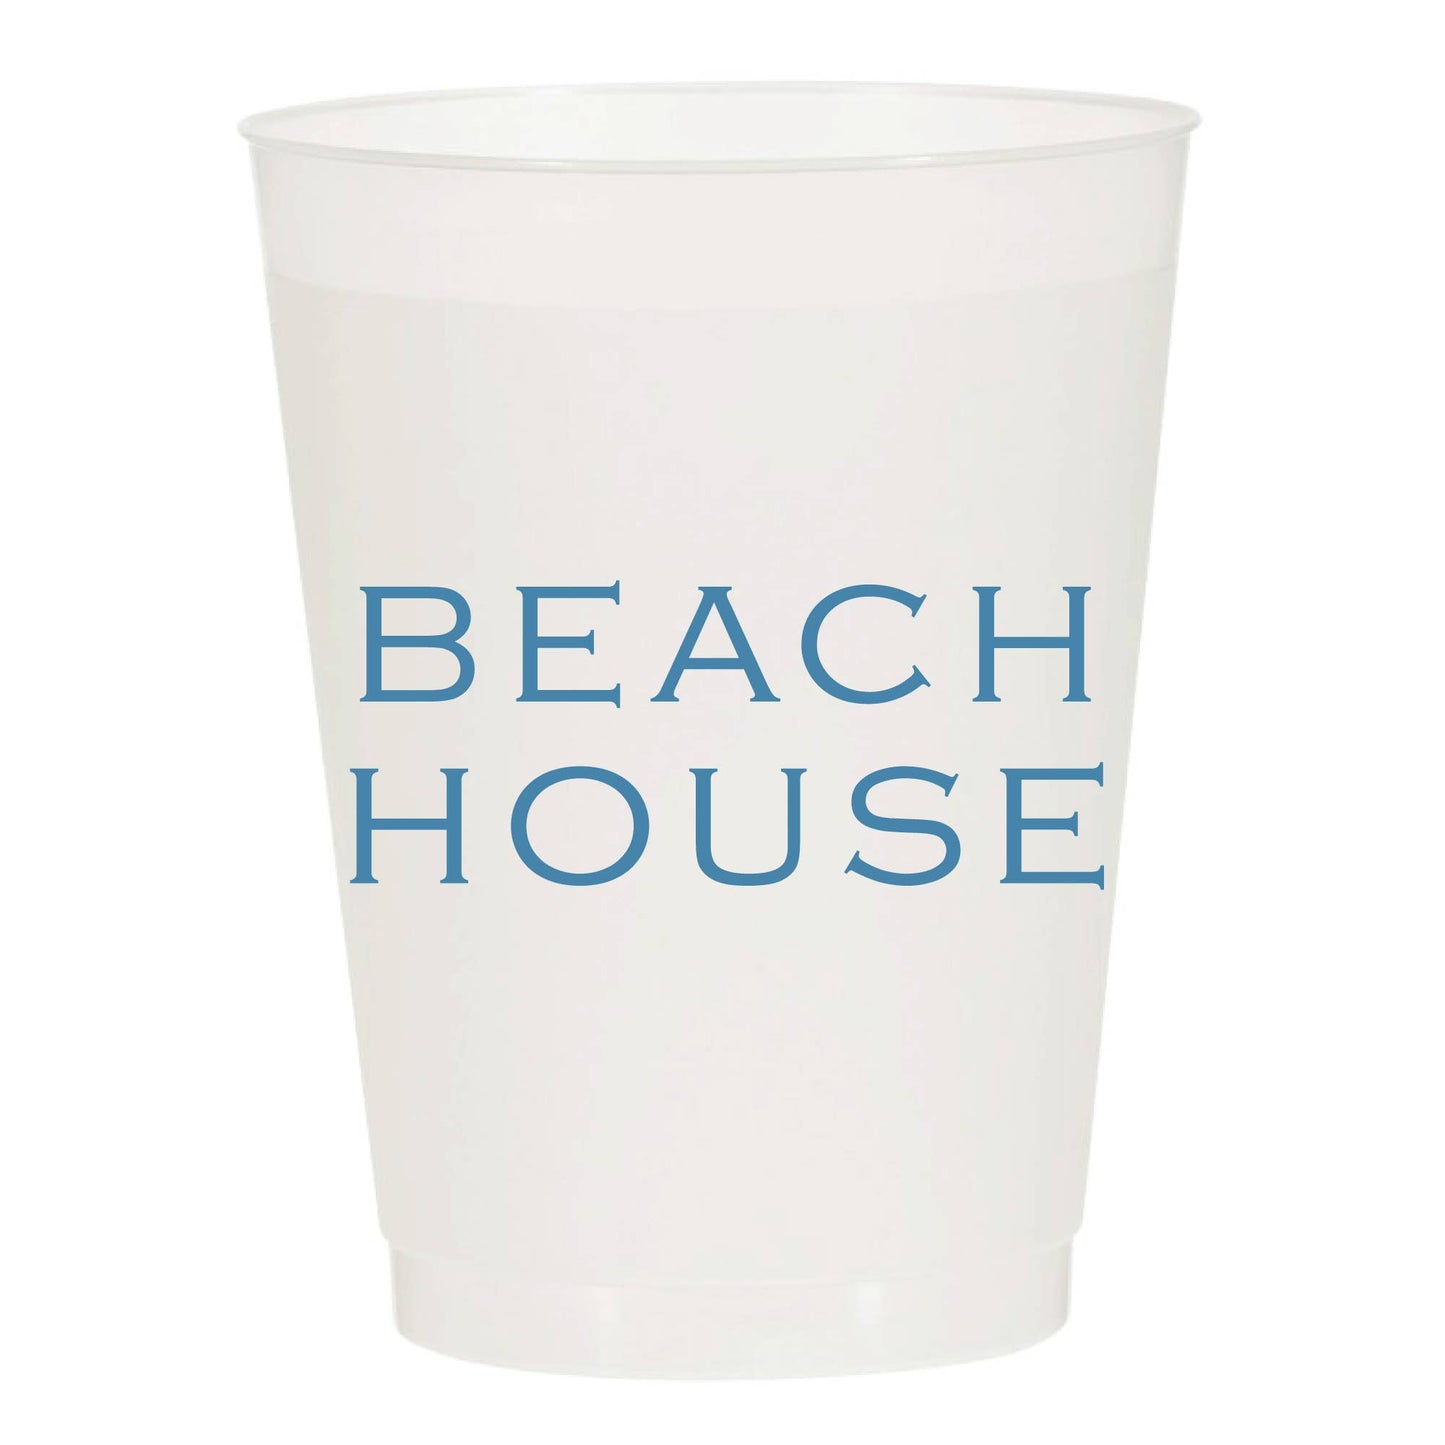 Beach House Reusable Cups - Set of 10 Cups (Blue)